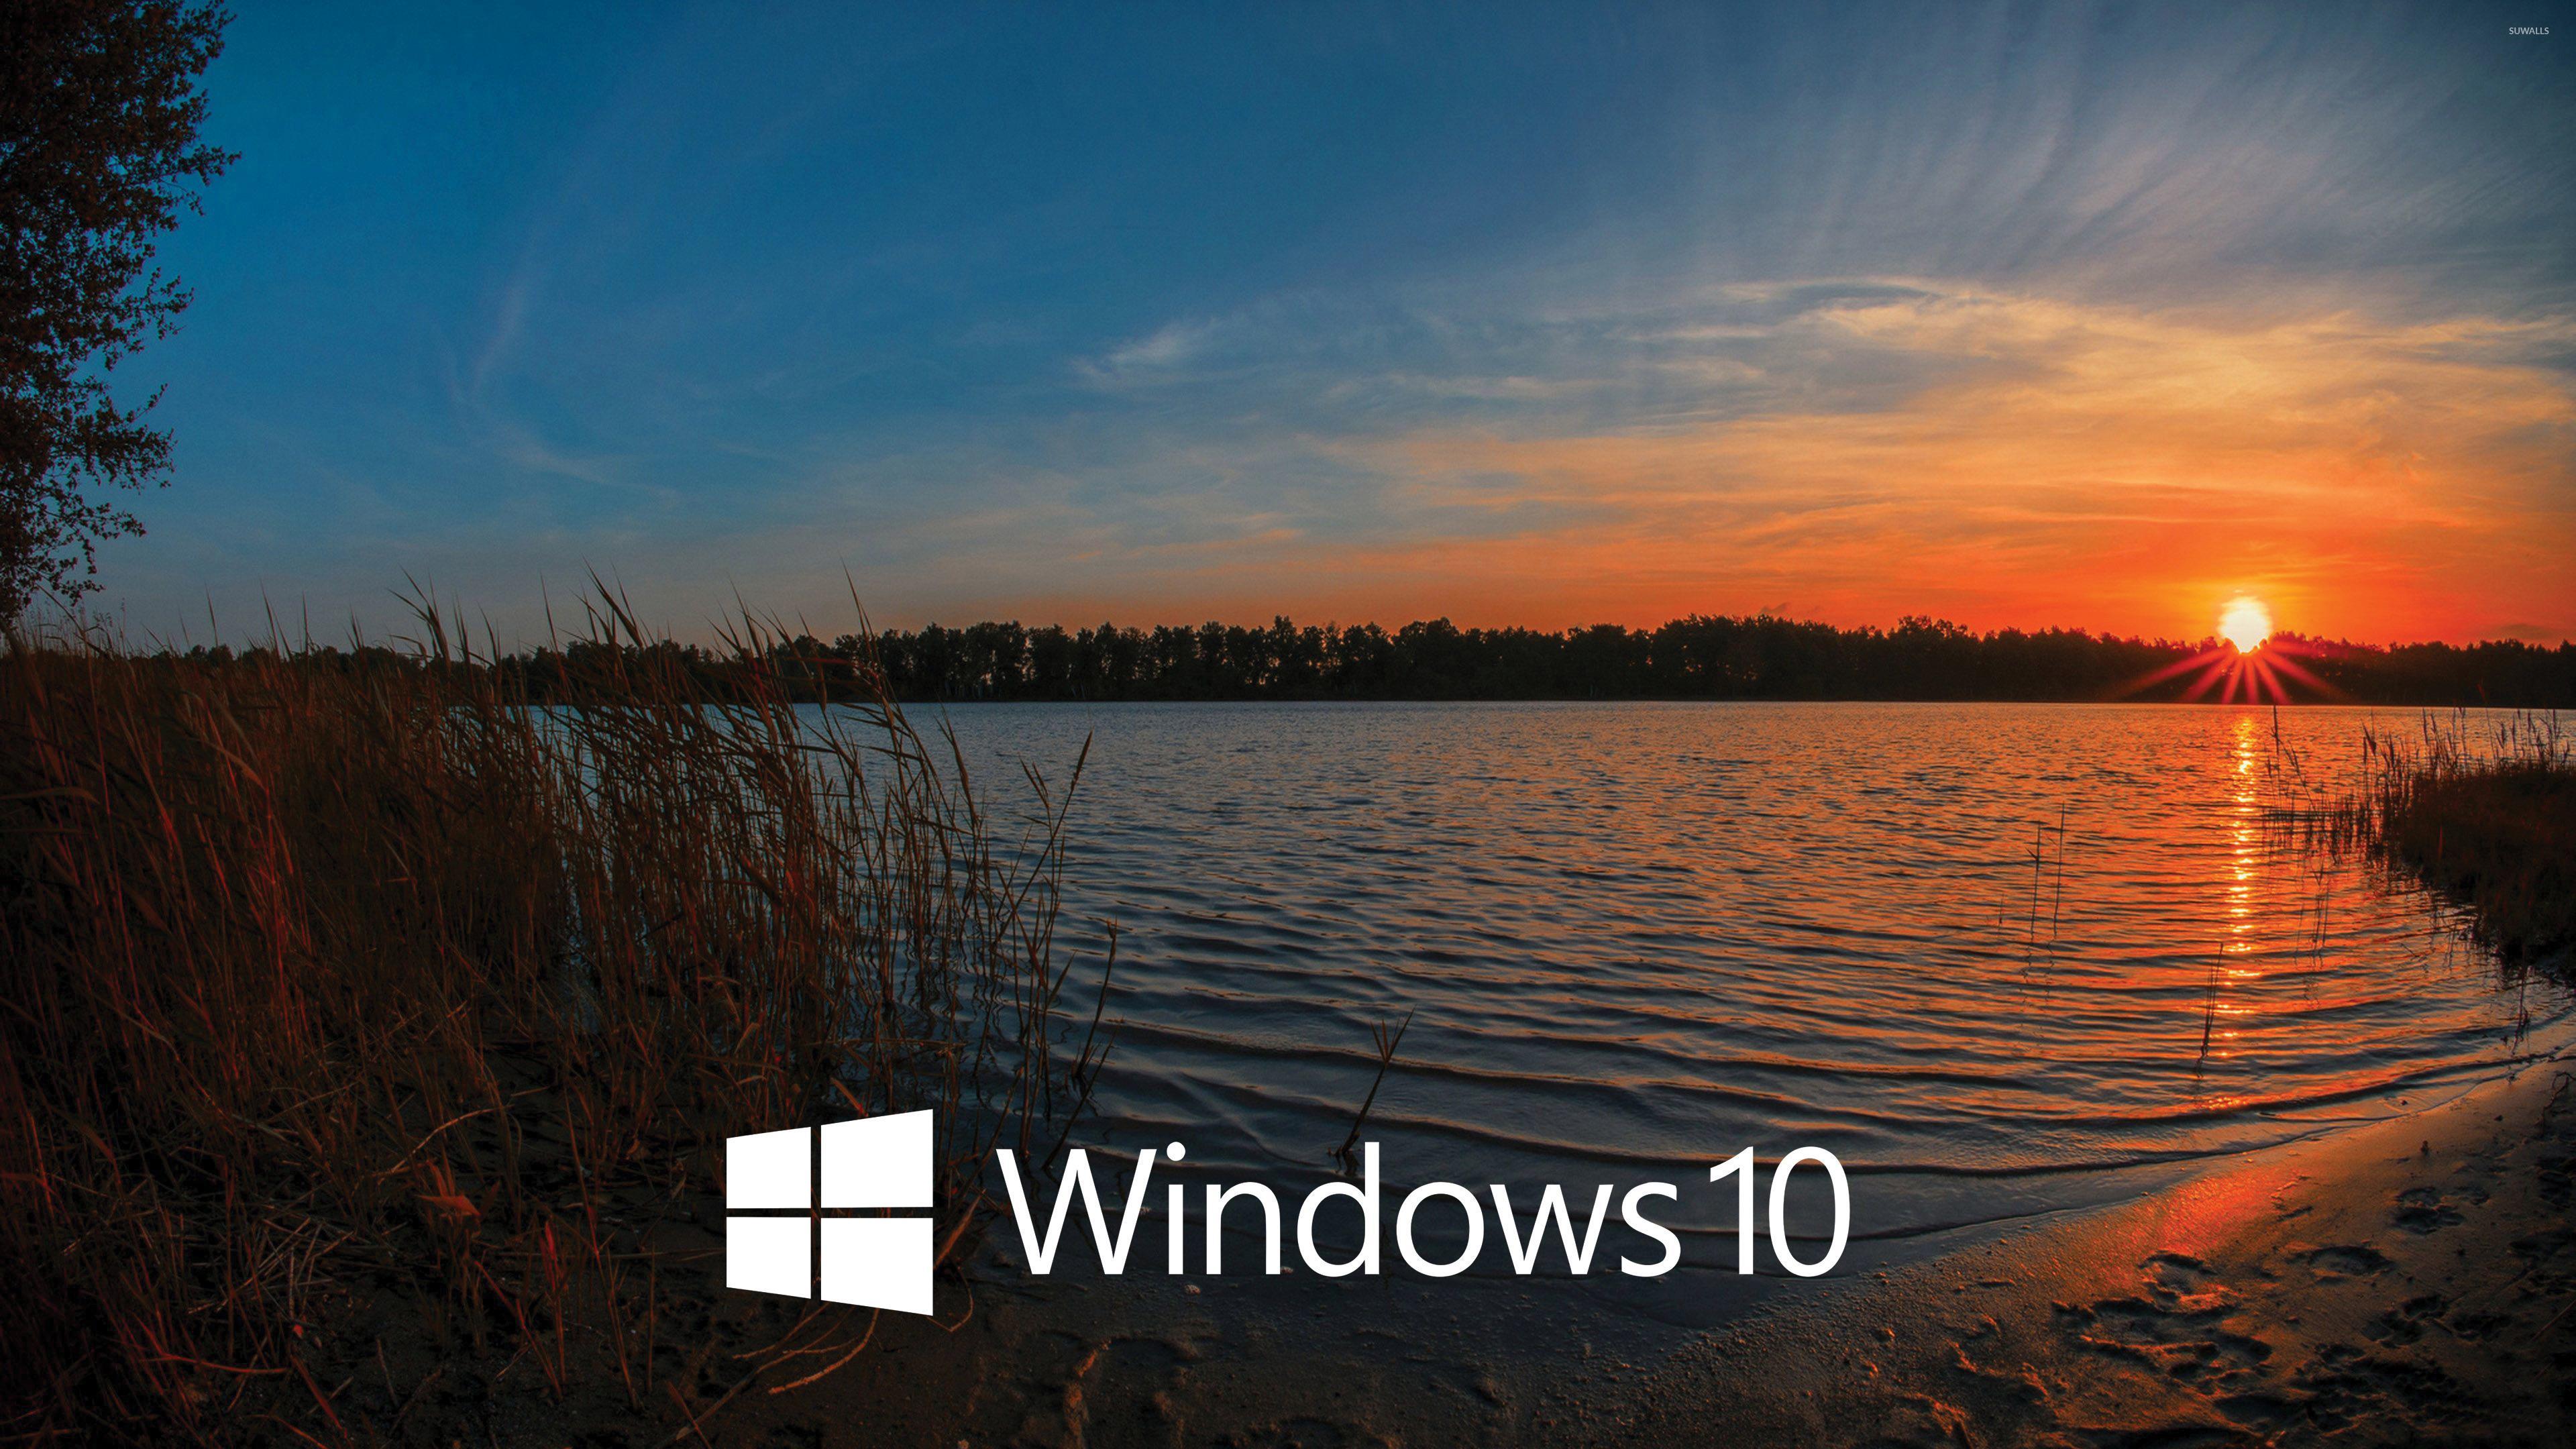 Sunset Windows 10 Wallpaper Hd 1920x1080 Sunrise Landscape Wallpaper